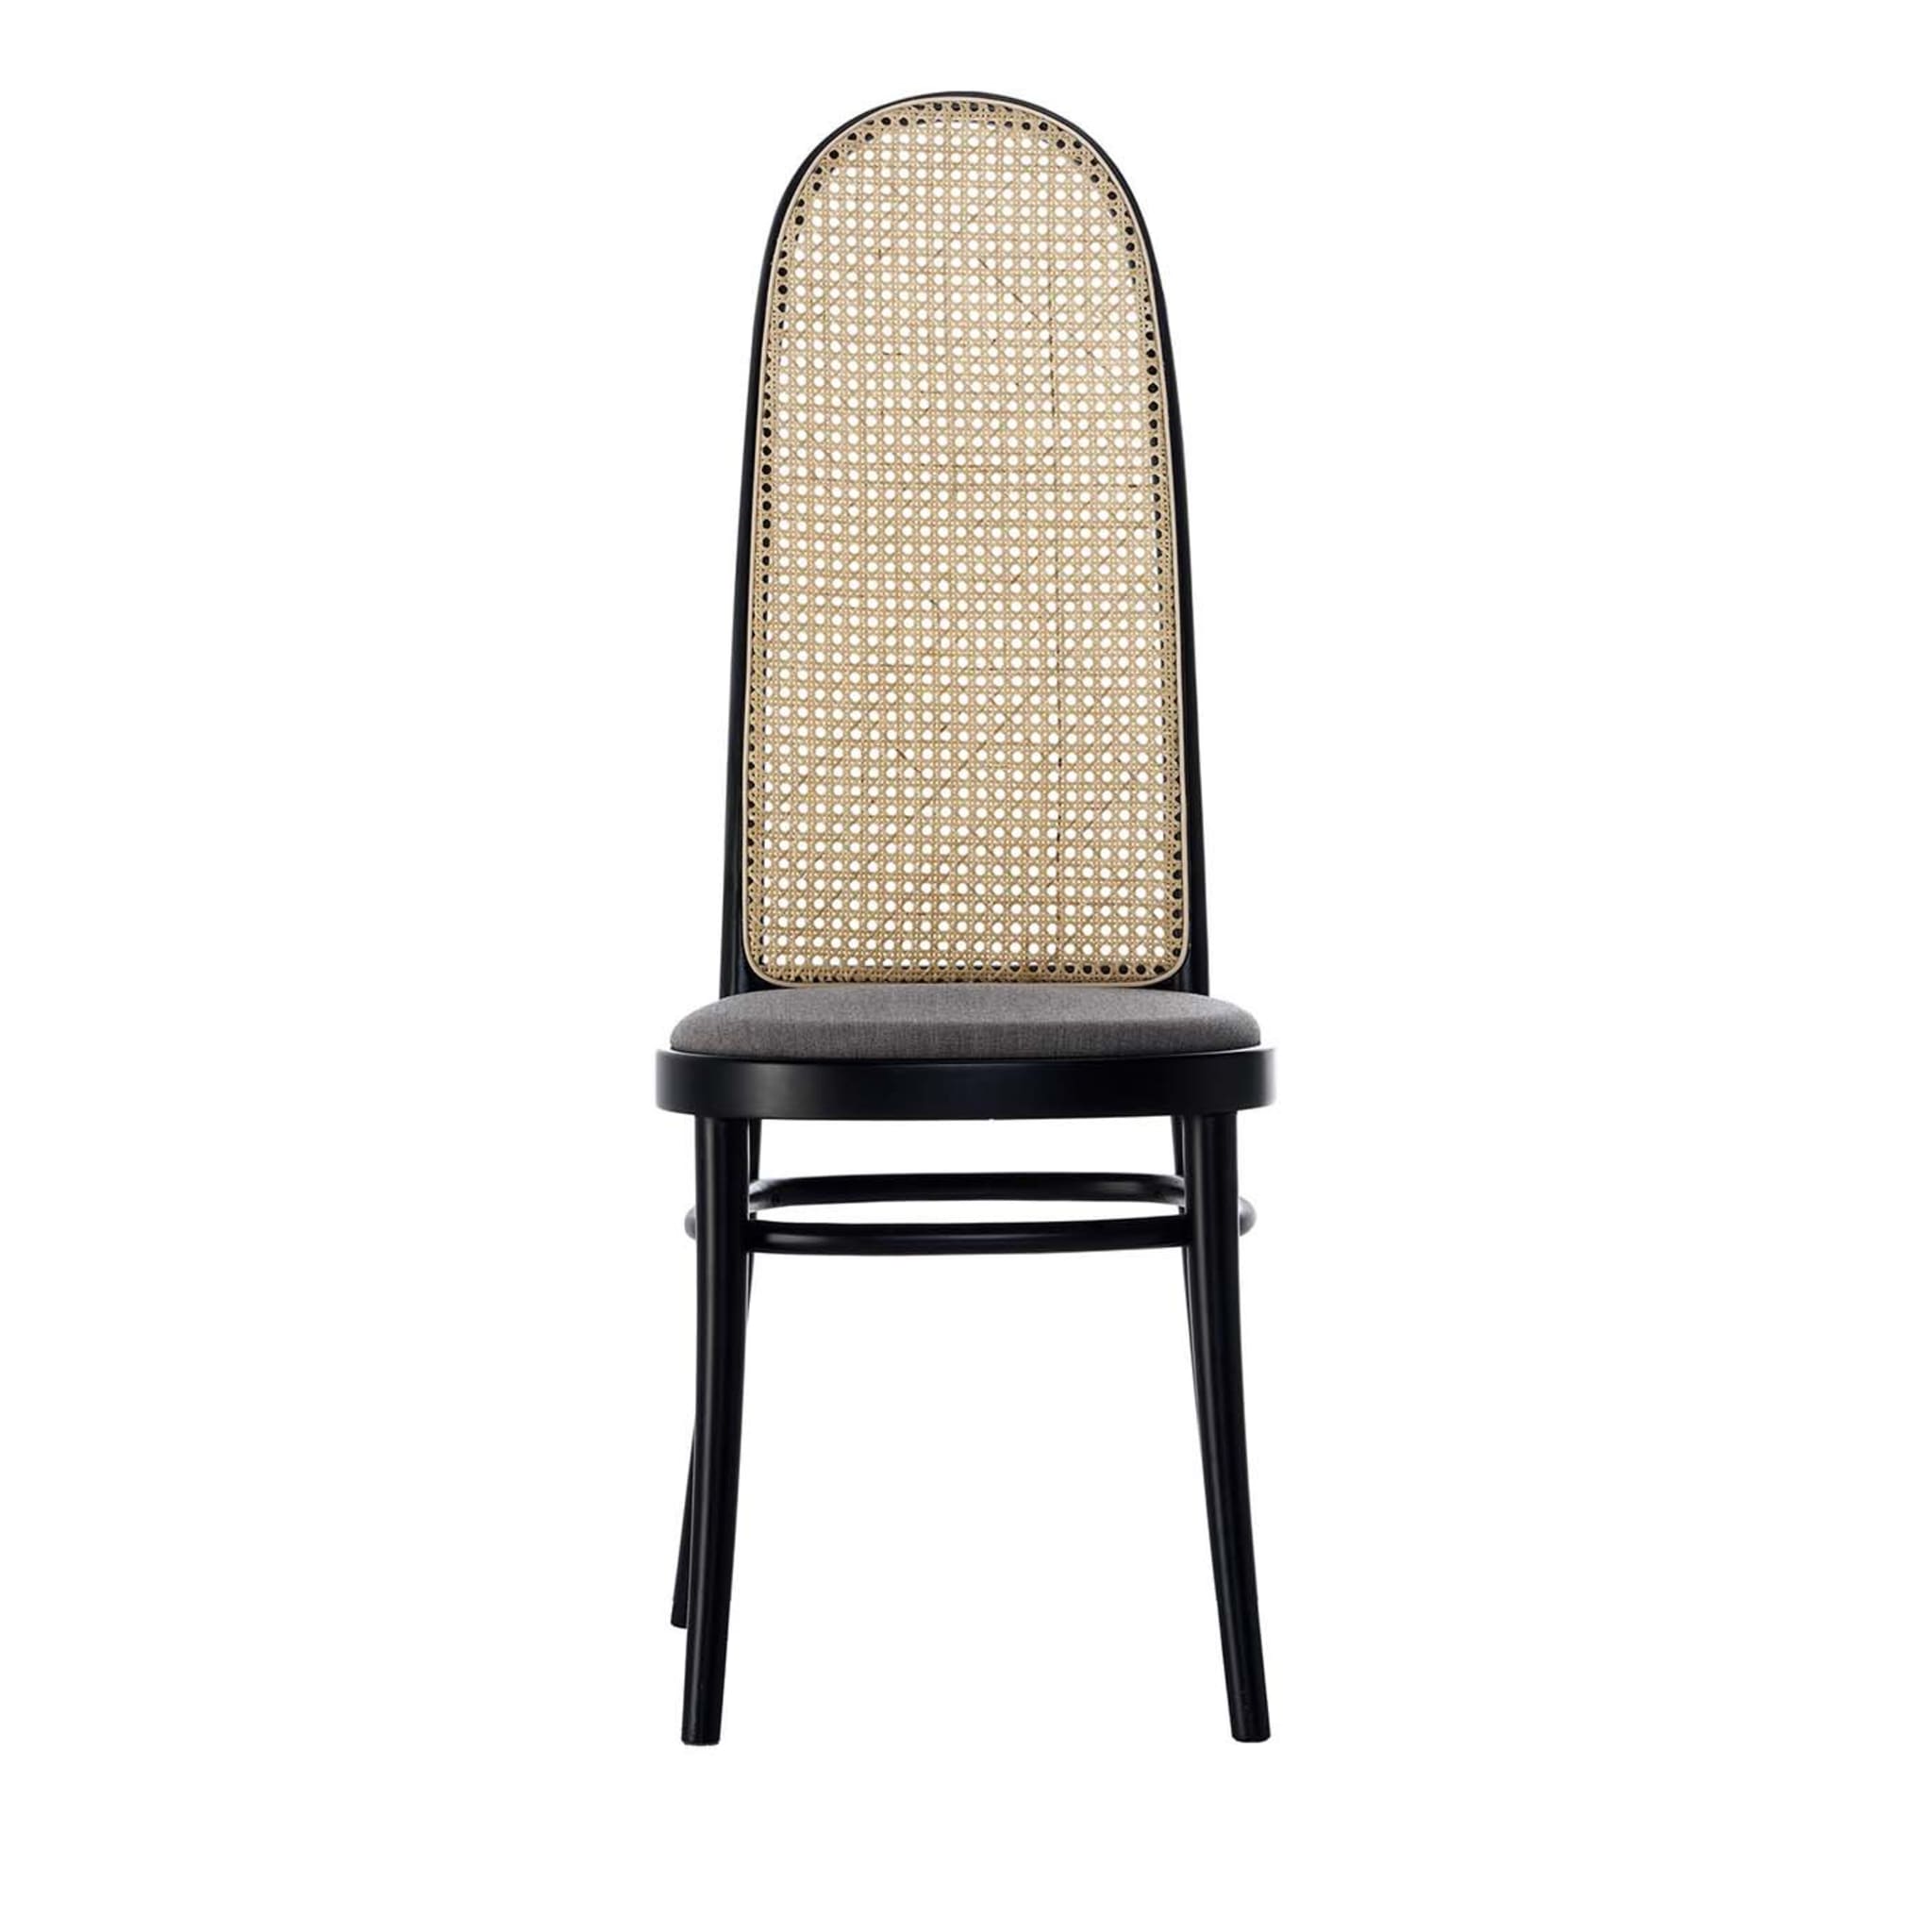 Morris Black Tall Chair by GamFratesi - Main view